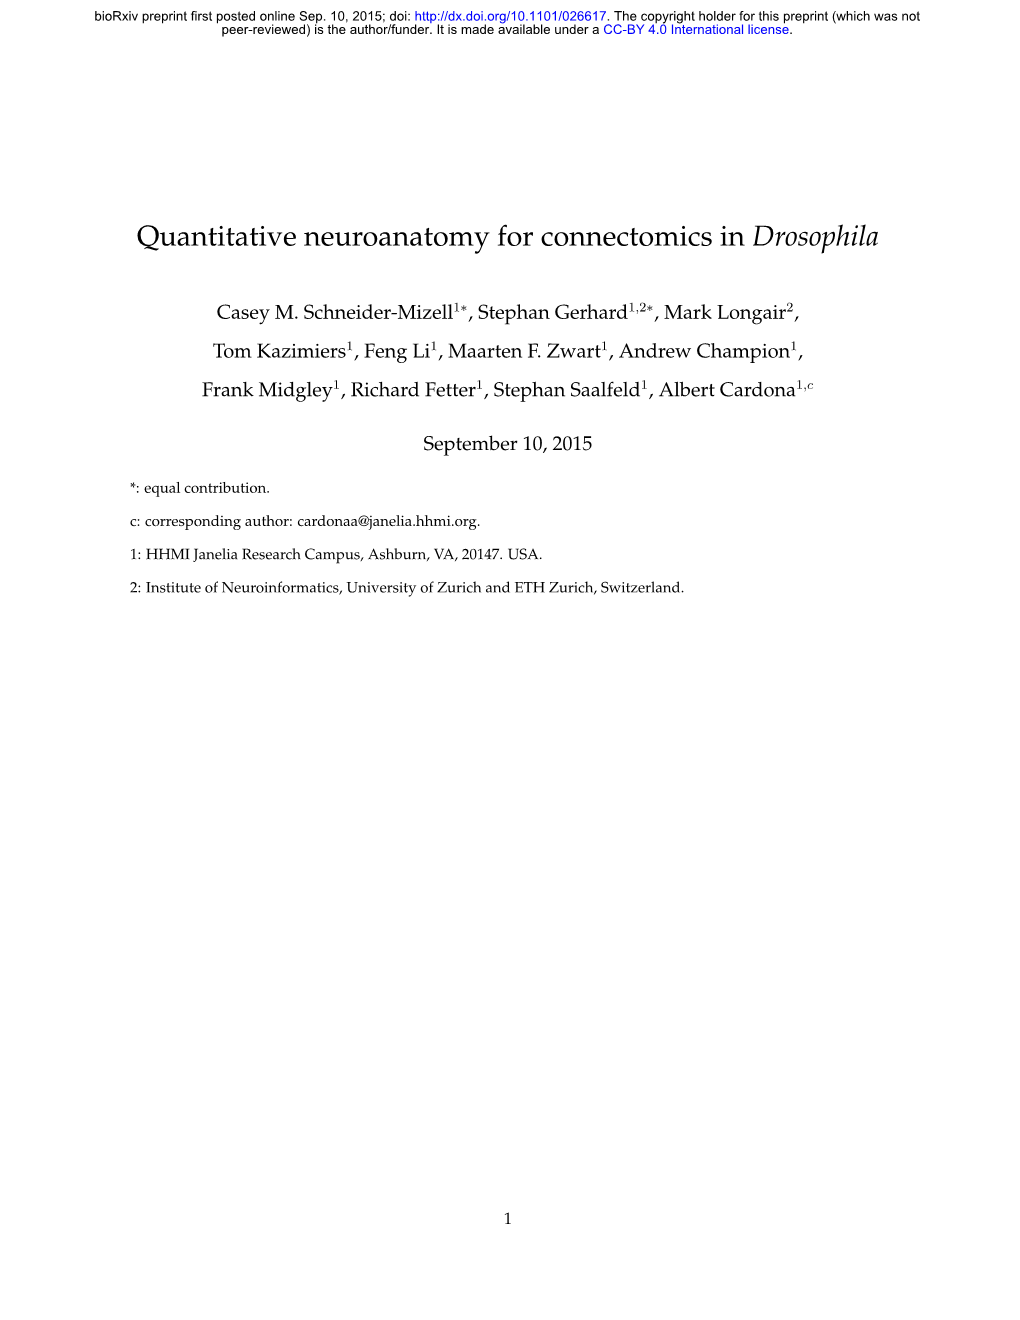 Quantitative Neuroanatomy for Connectomics in Drosophila